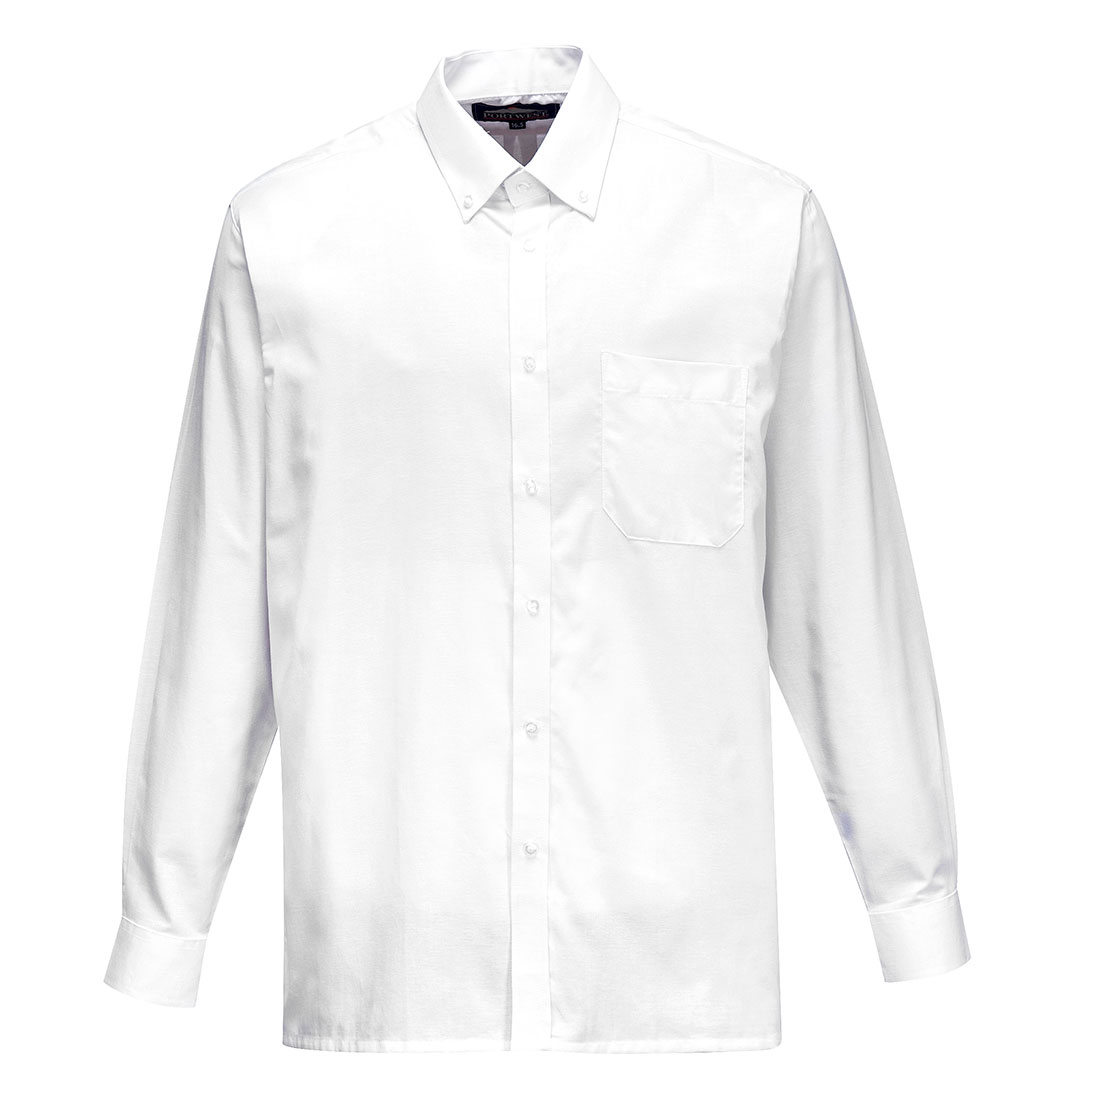 Oxford Shirt, Long Sleeves - White